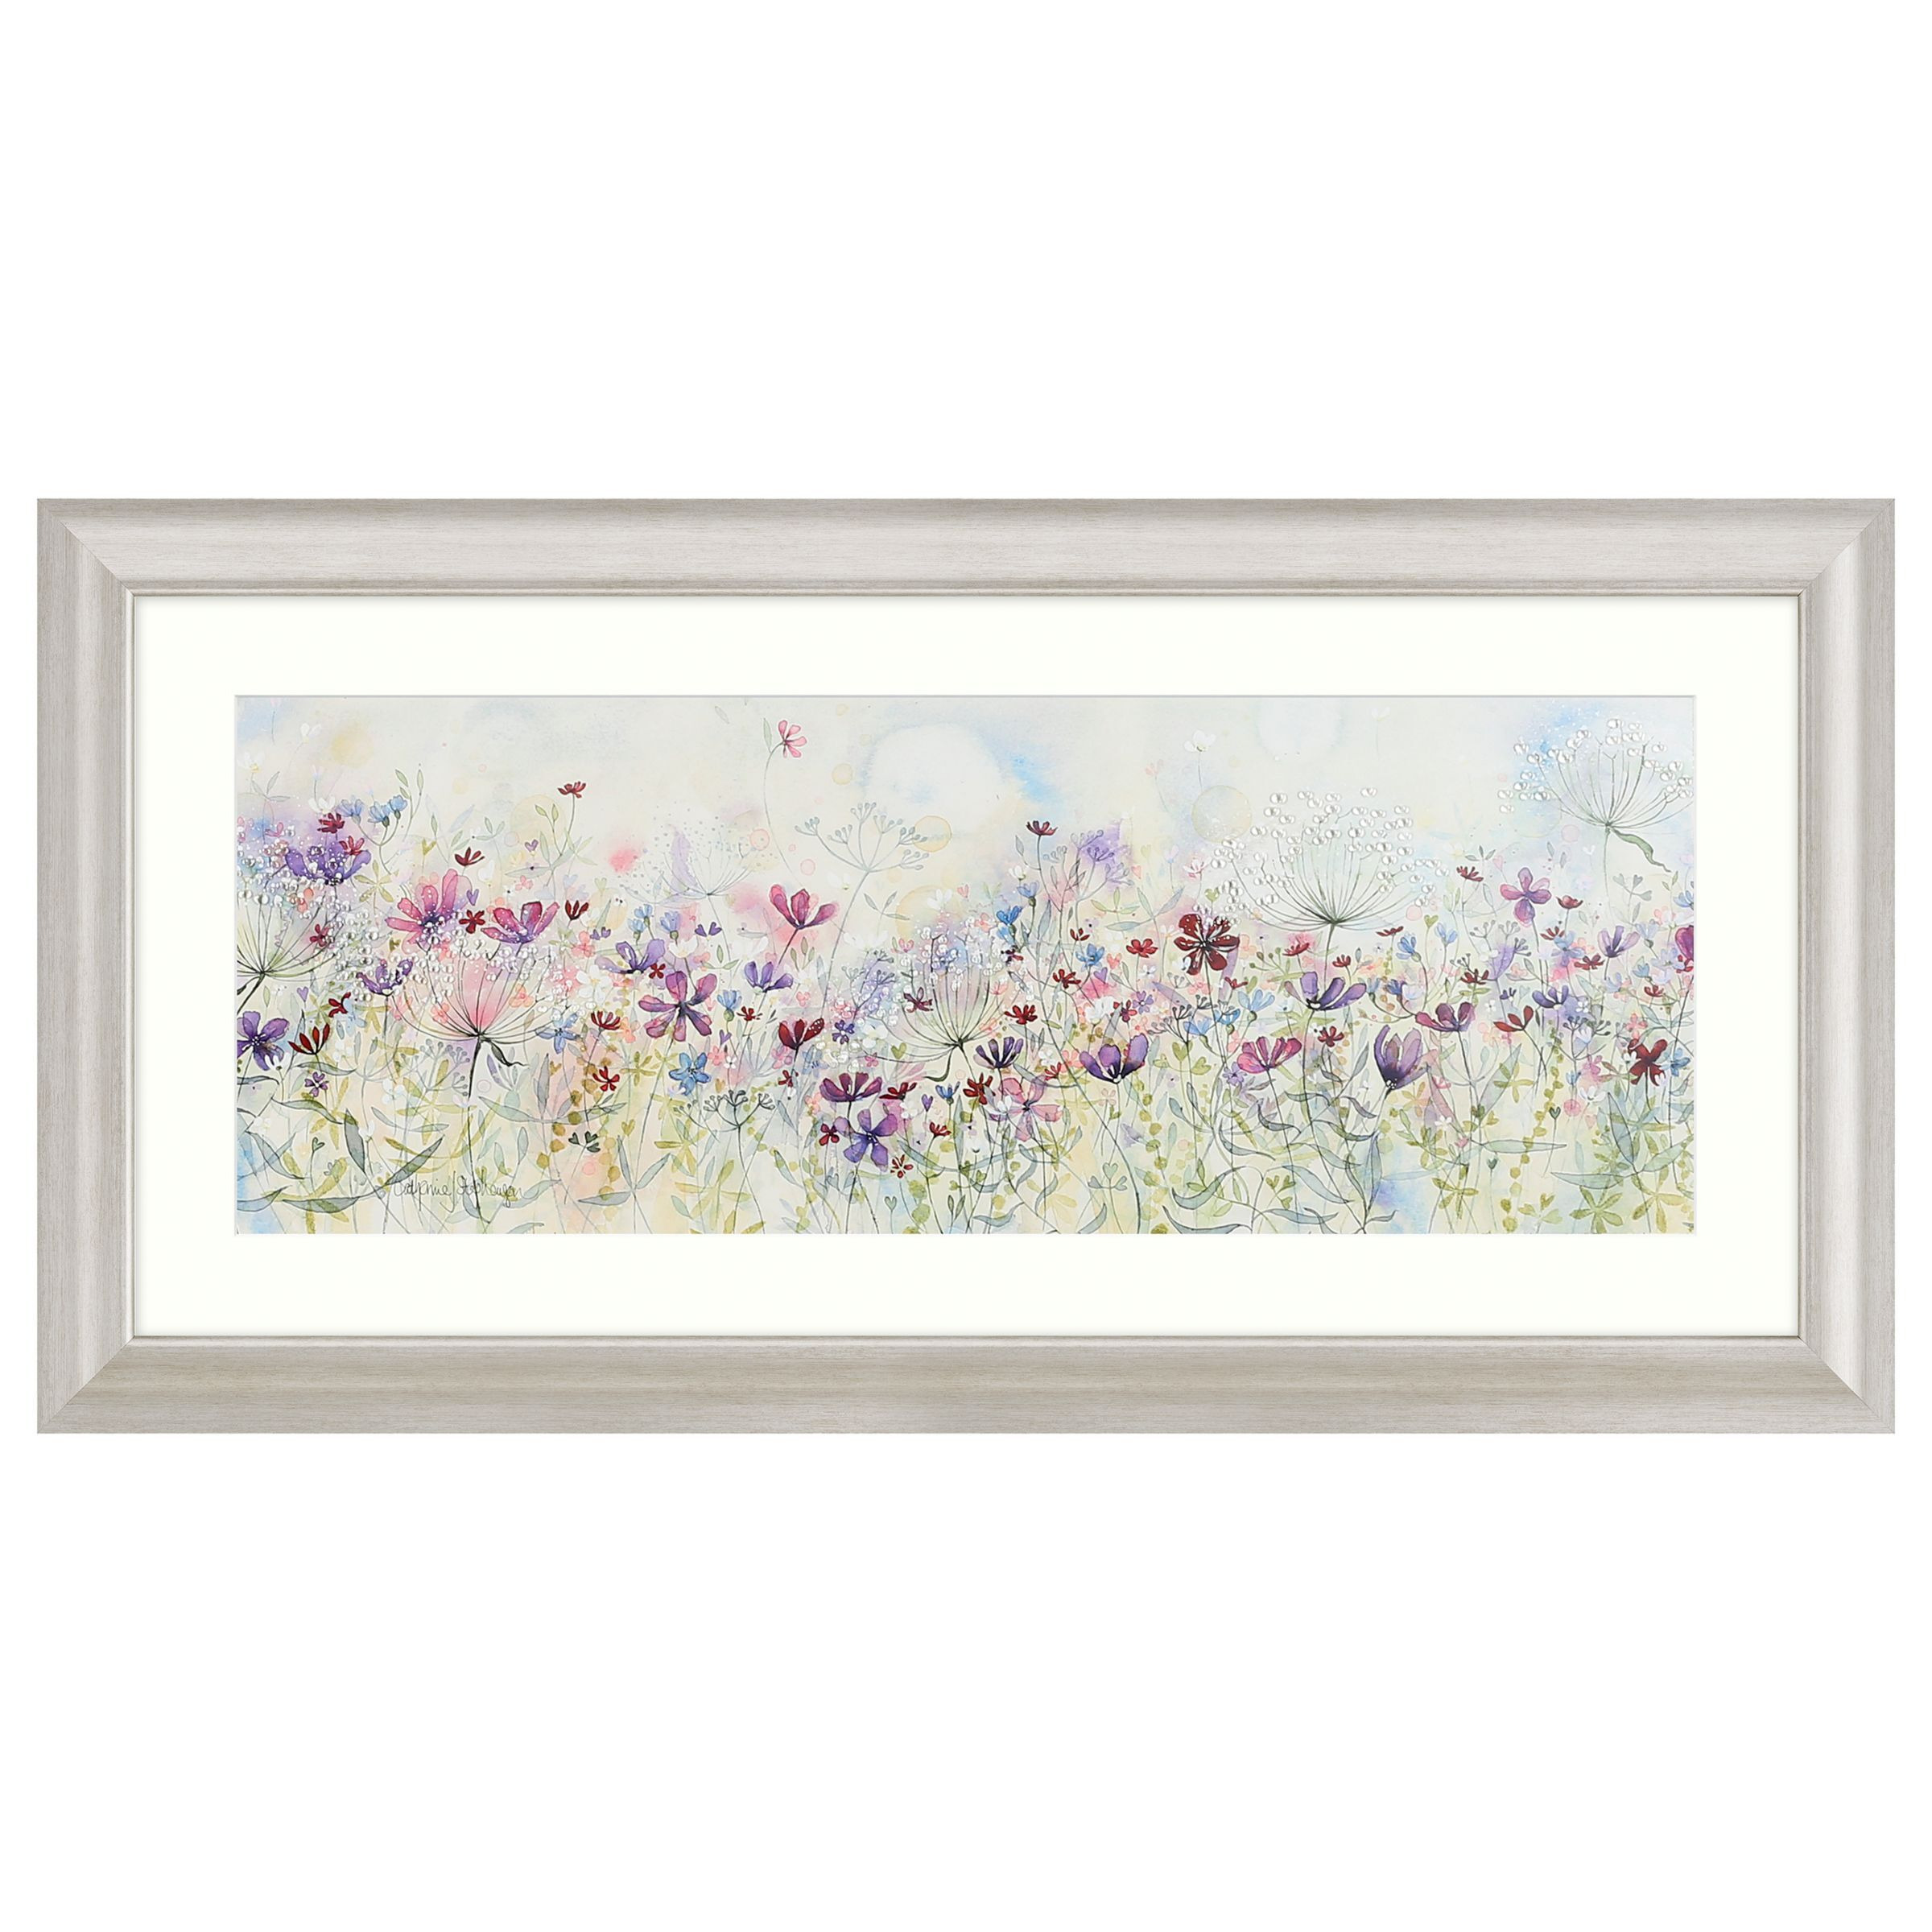 Catherine Stephenson - Meadow Of Wild Flowers Embellished Framed Print, 110 x 55cm - image 1